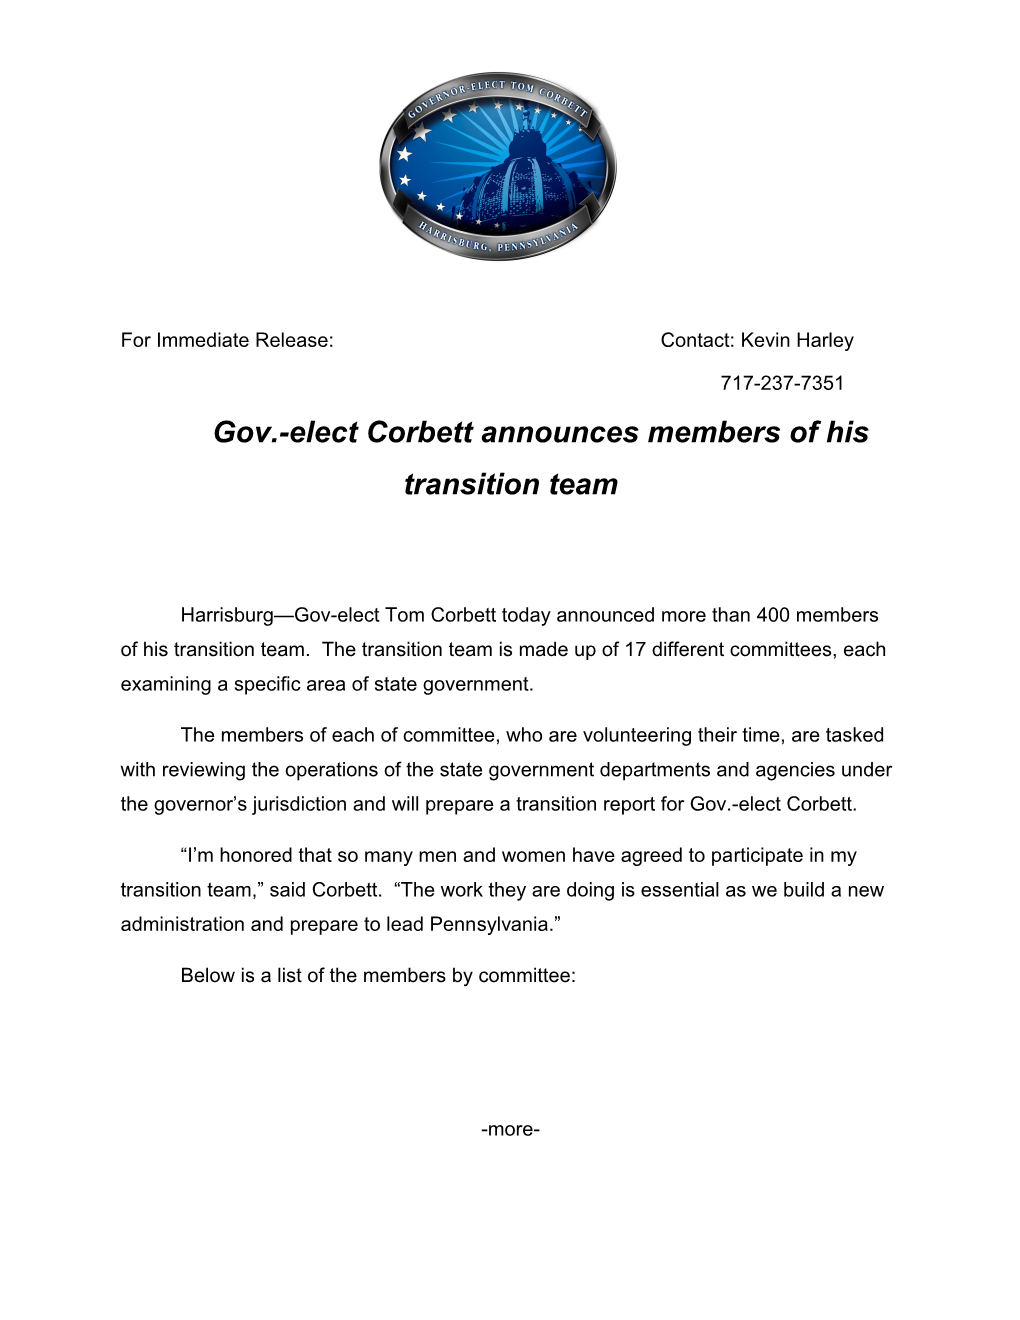 Gov.-Elect Corbett Announces Members of His Transition Team